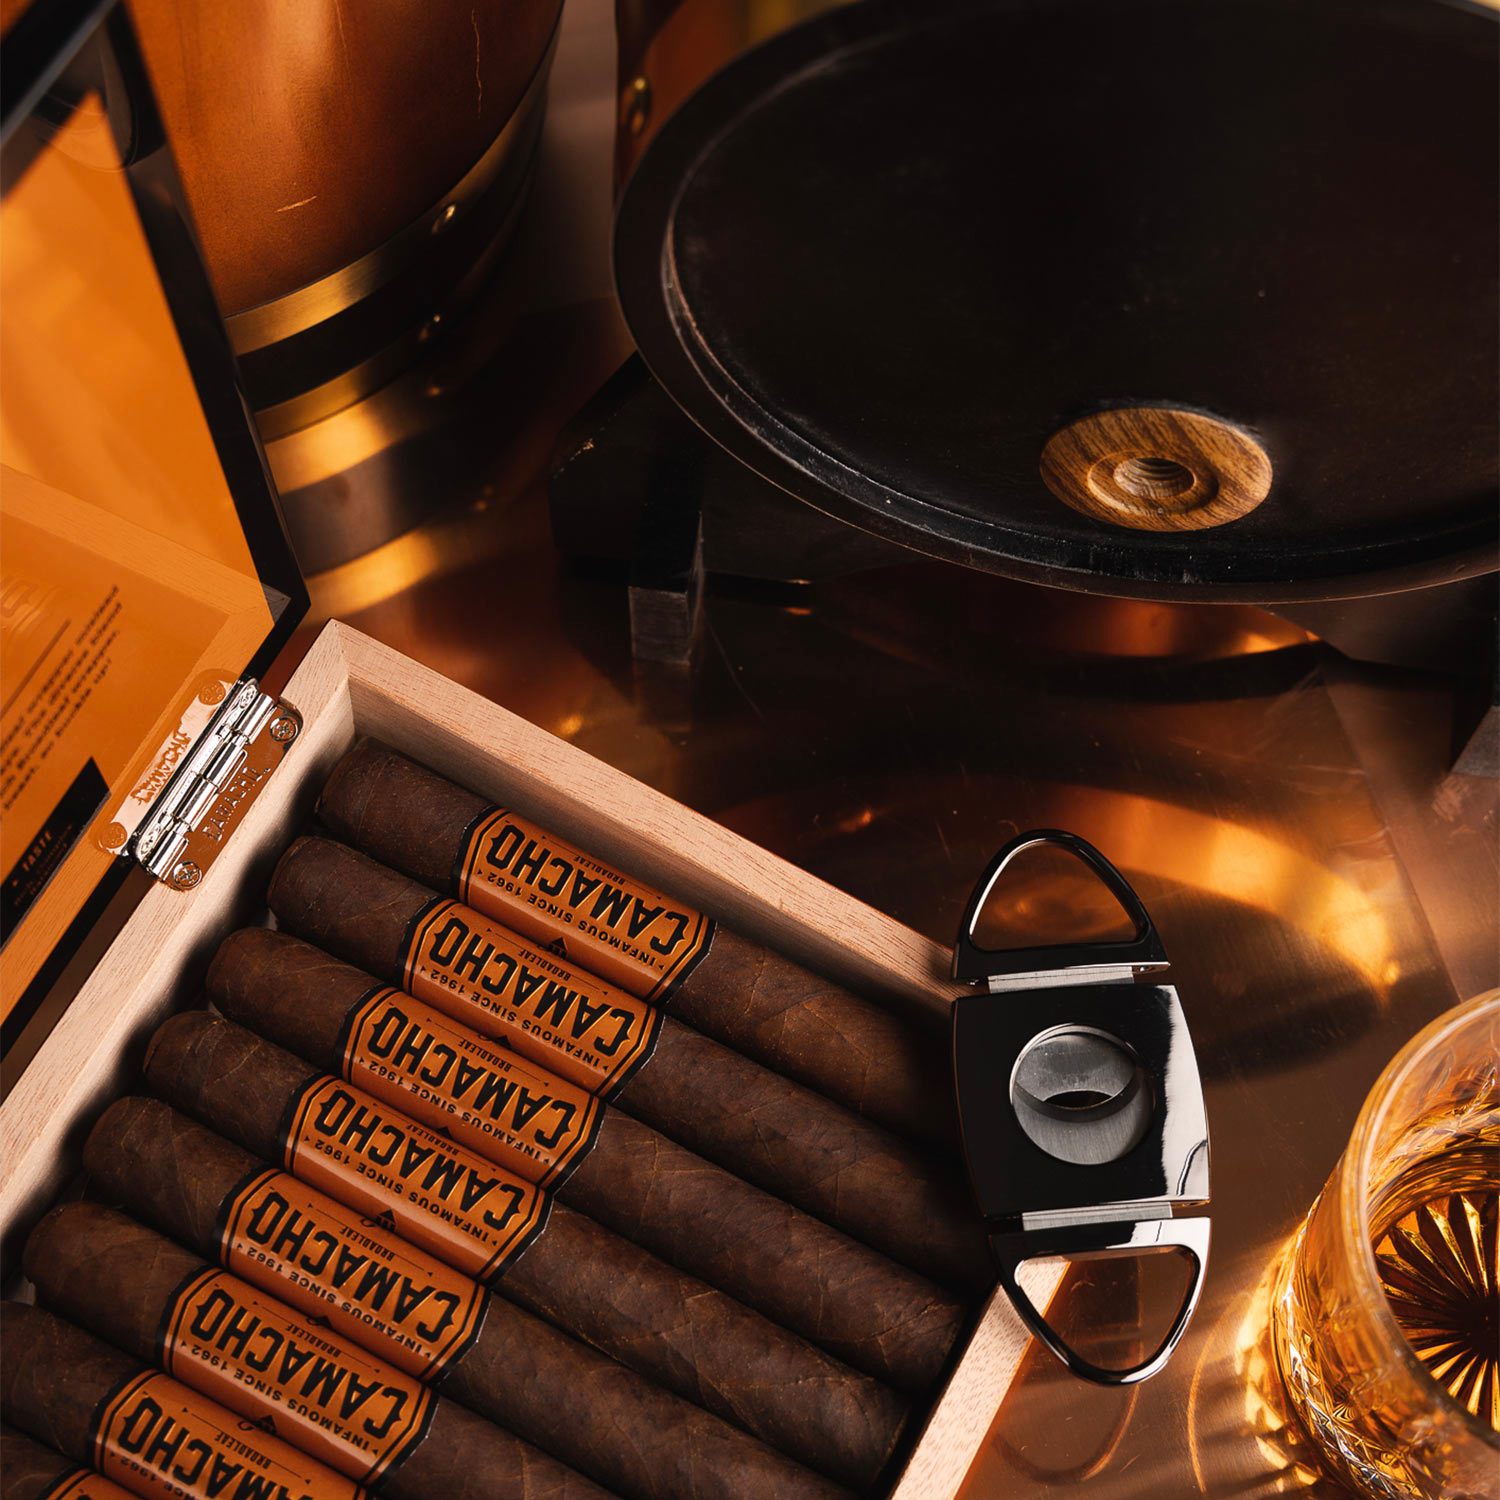 A Camacho Broadleaf cigar with a Honduran Broadleaf wrapper and a Dominican Tobacco filler